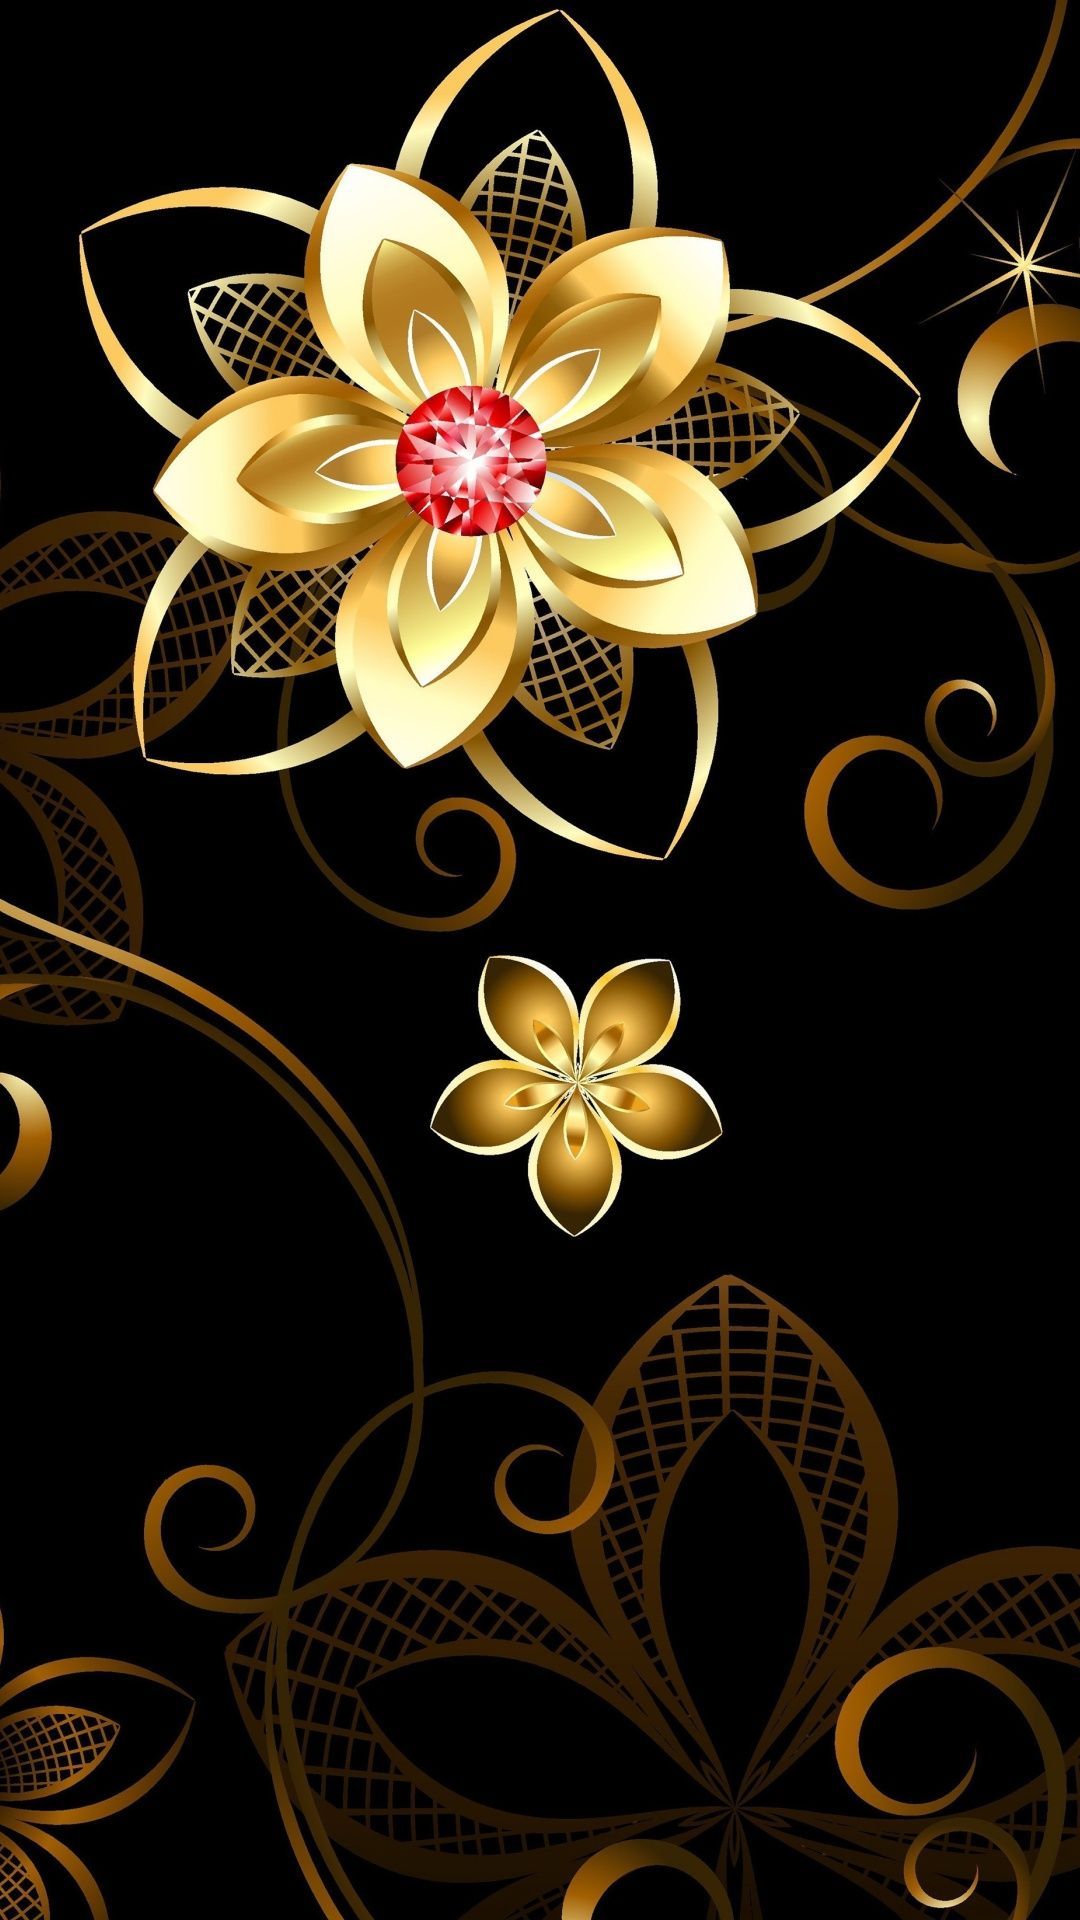 3D Golden Flower. Flower phone wallpaper, Flower wallpaper